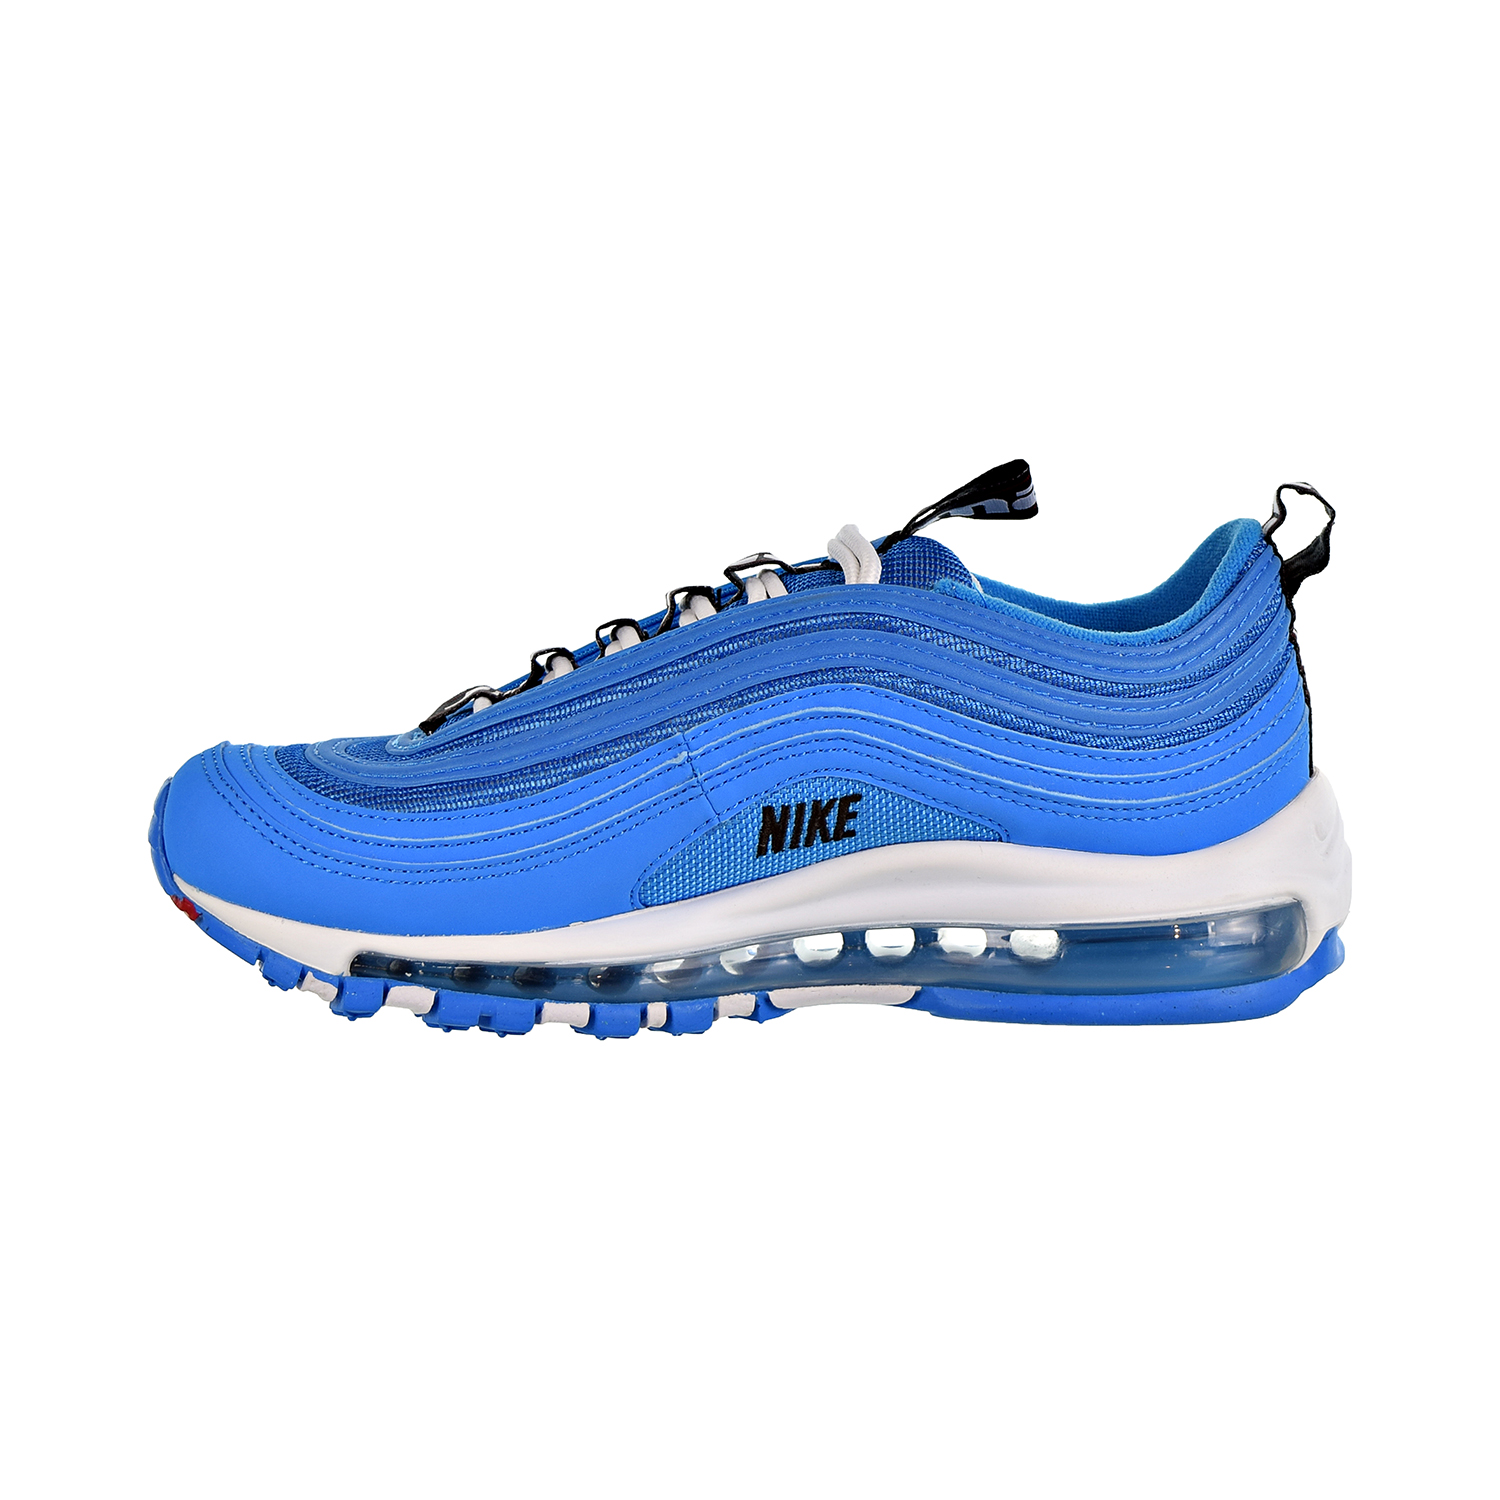 Nike Air Max 97 SE Big Kids' Shoes Blue Hero-White-Black AV3180-400 | eBay